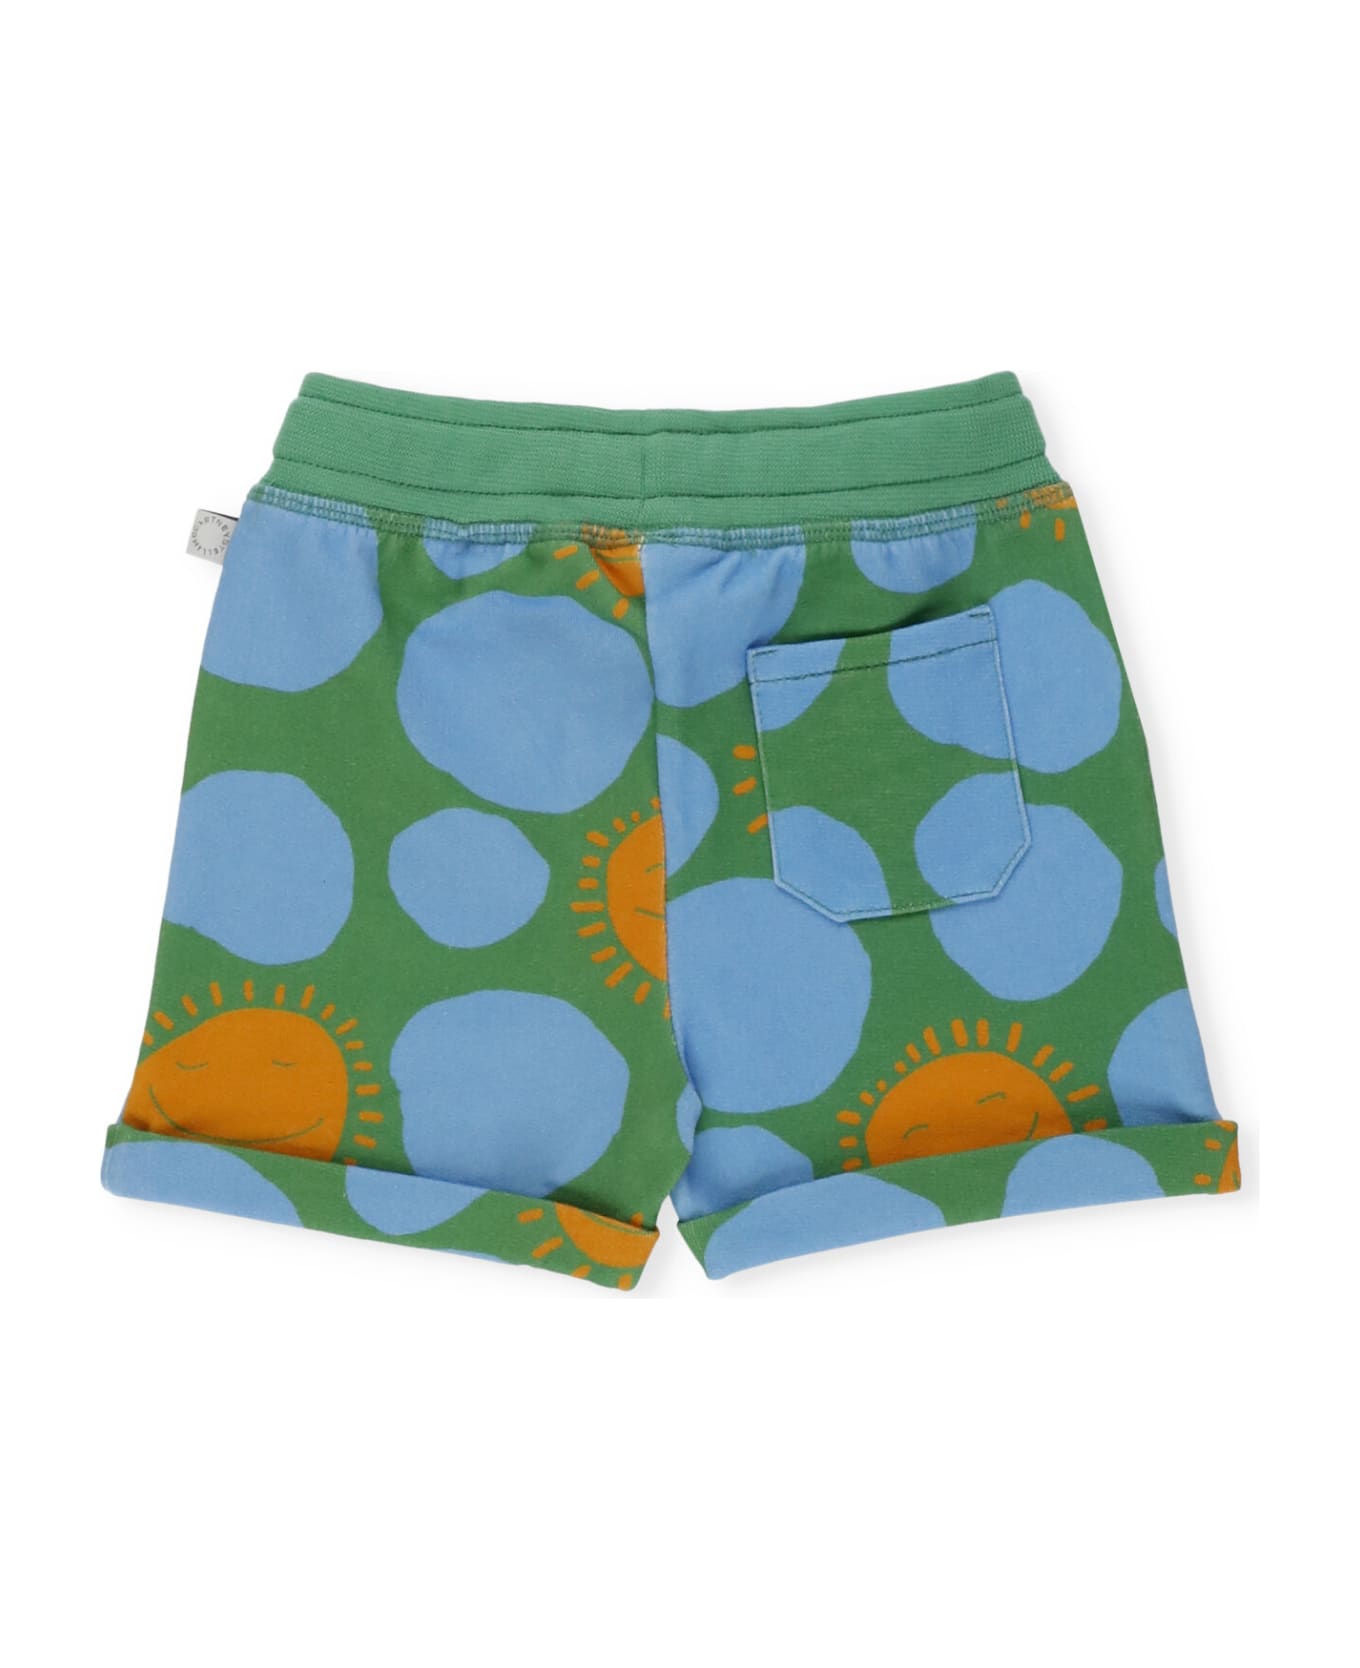 Stella McCartney Printed Bermuda Shorts - Verde/multicolor